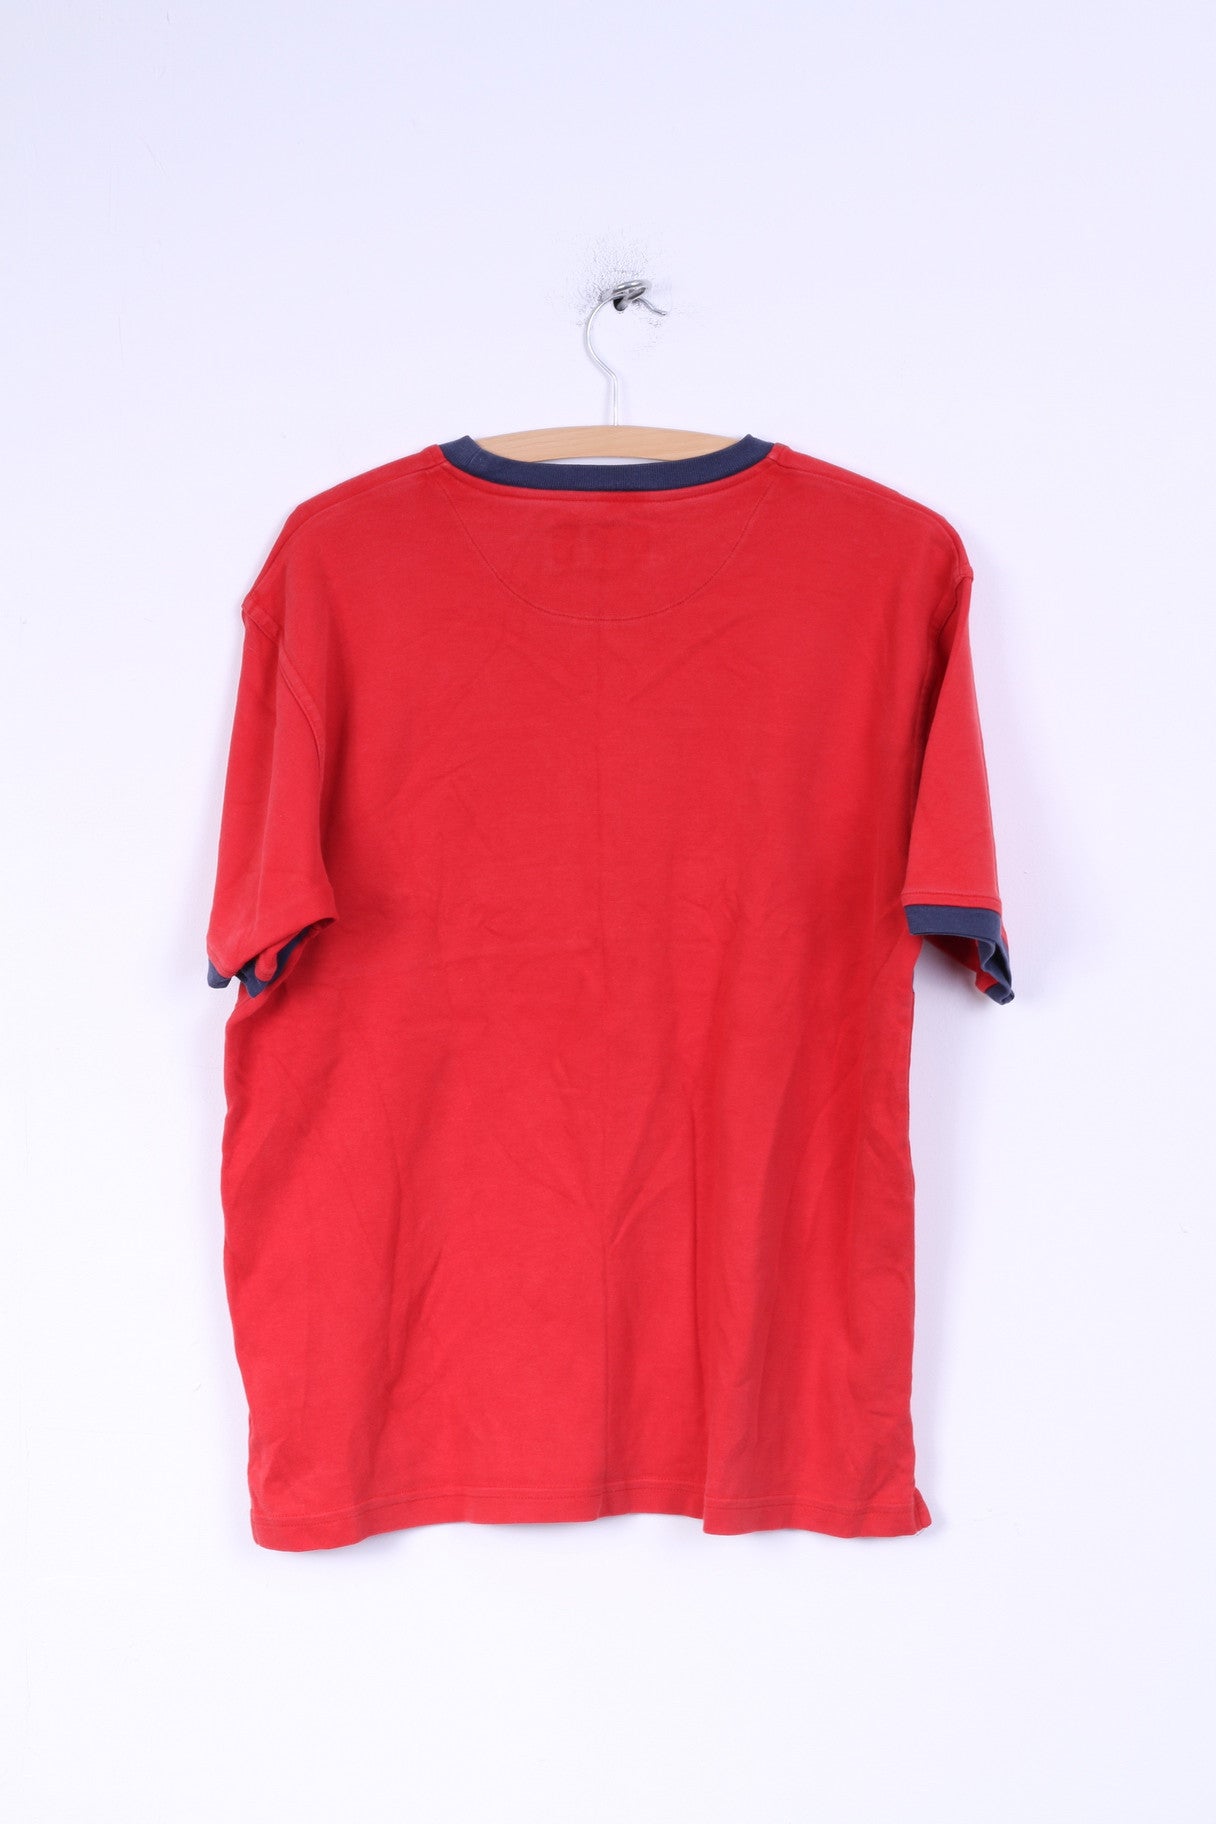 Lambretta Mens XL T- Shirt Red 64 Cotton Crew Neck